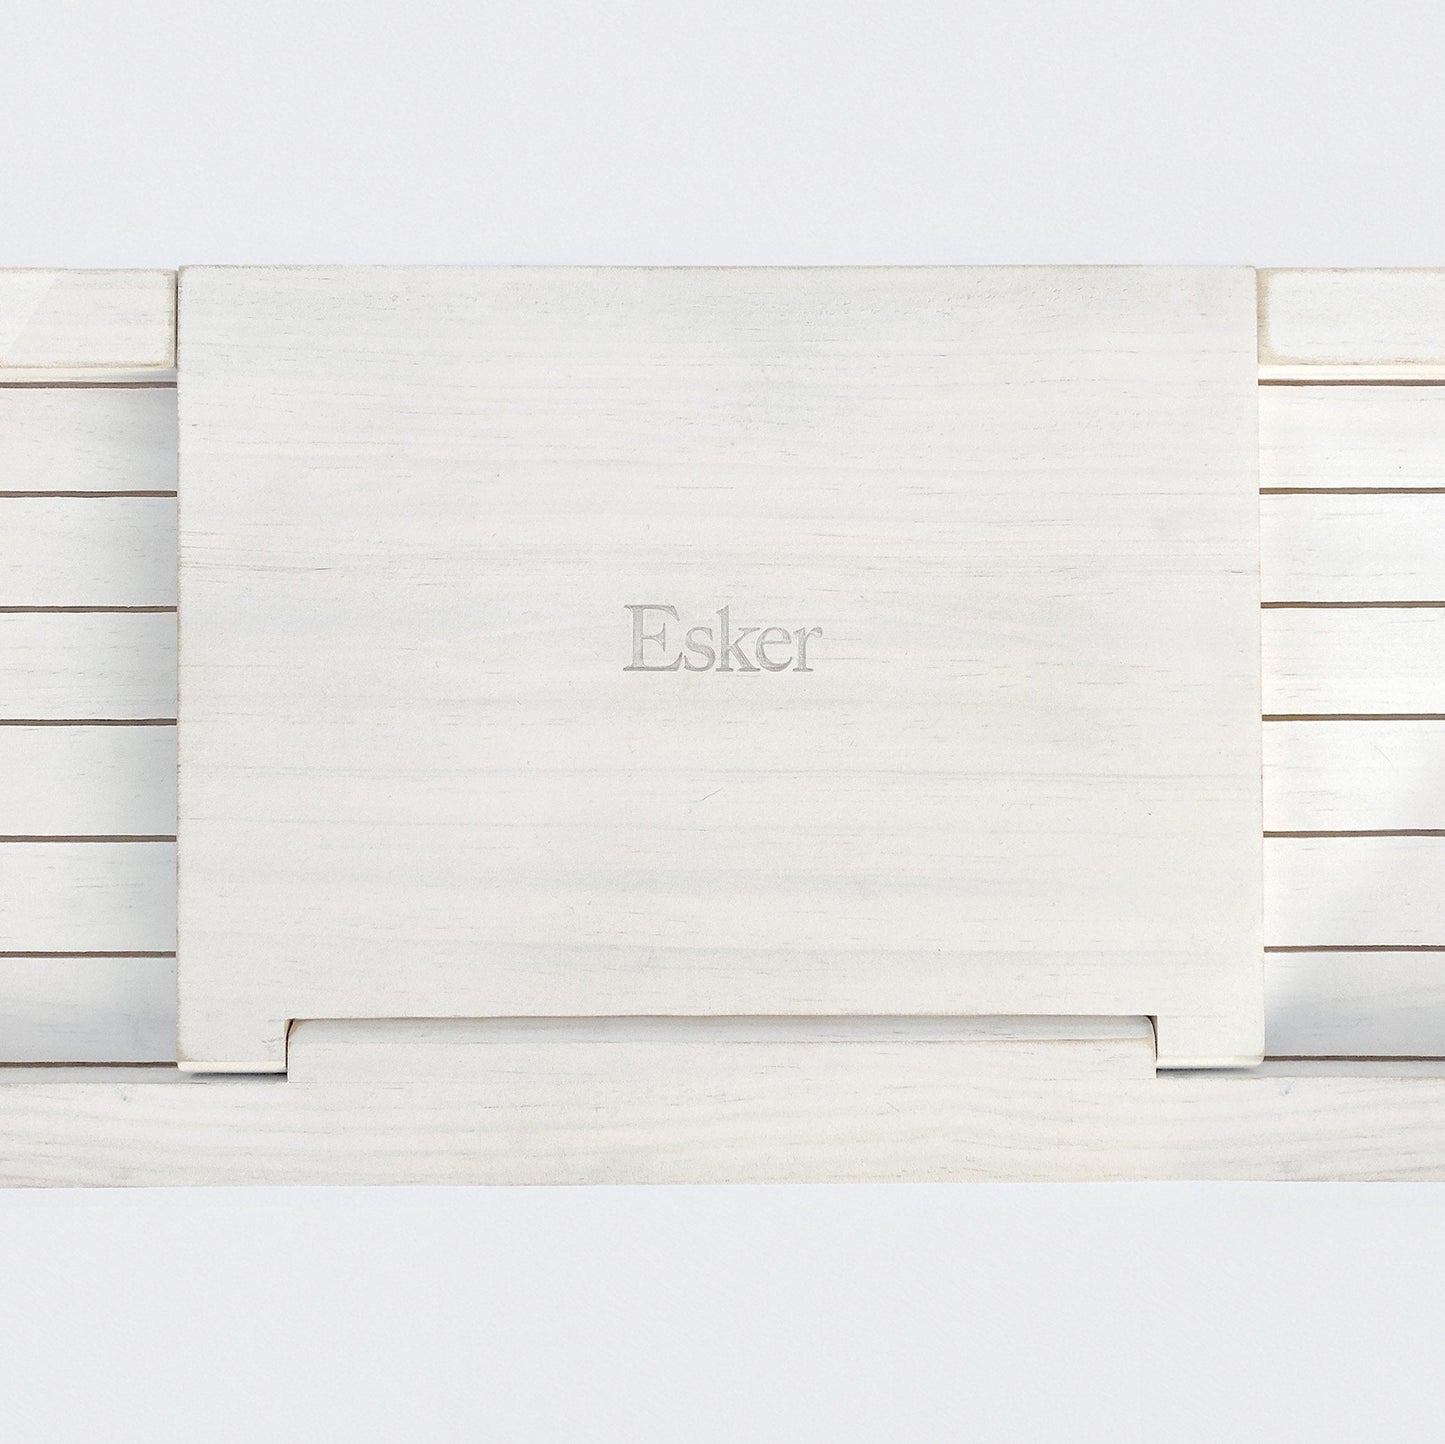 Esker White Bath Tray. The Bath Board